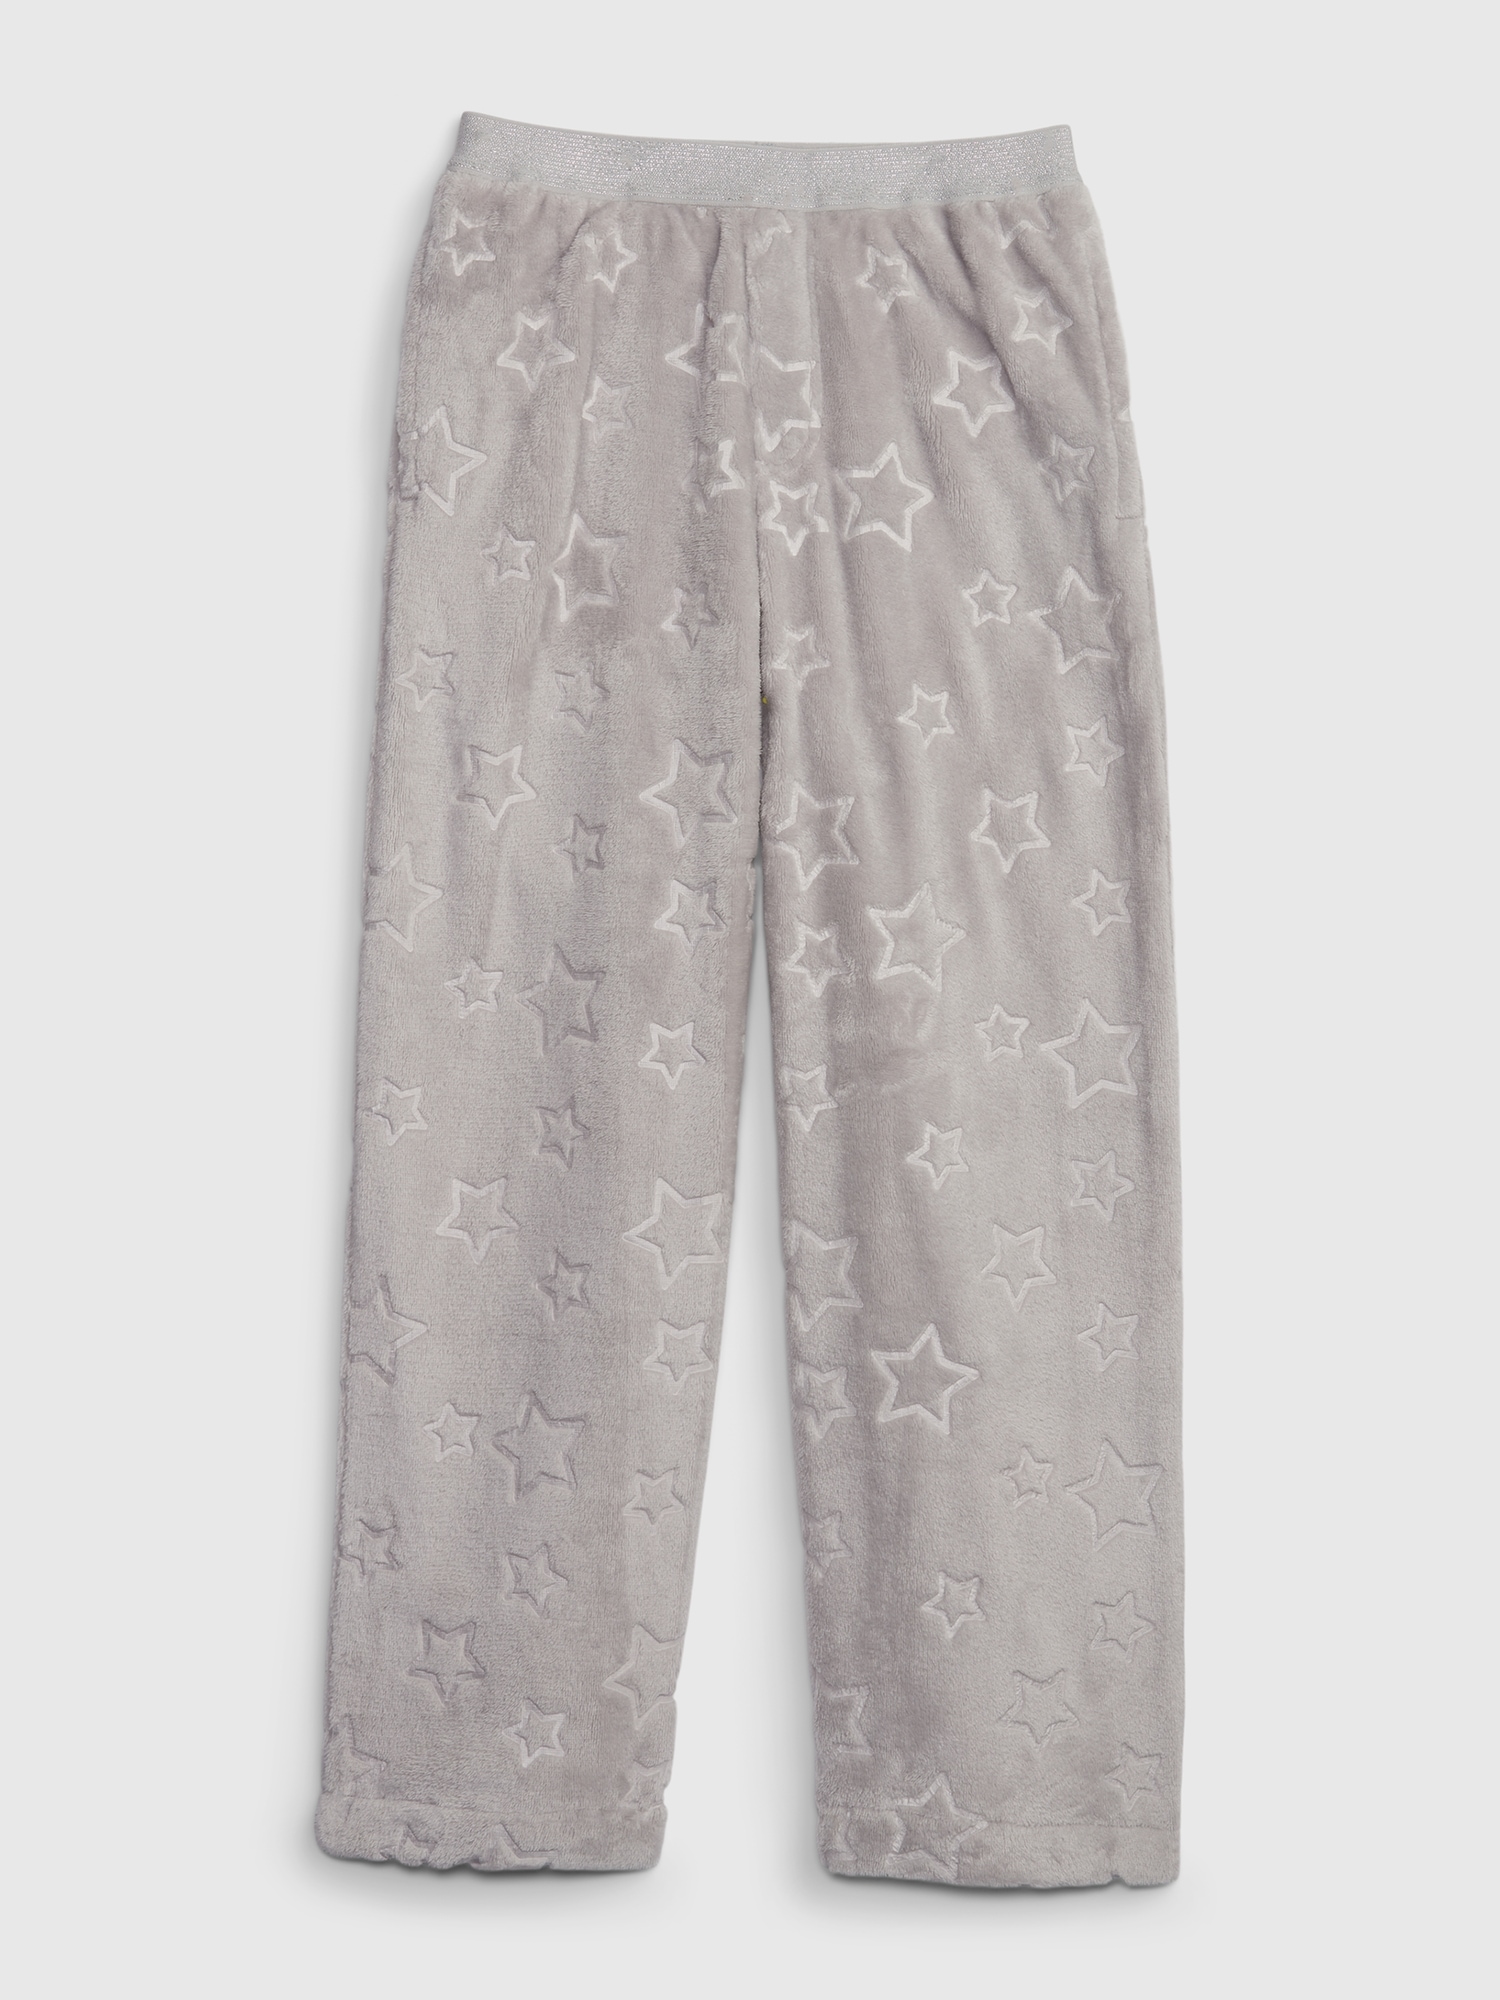 Geifa Kids Winter Wear Cotton Fleece Pajama Full Pants Bottoms